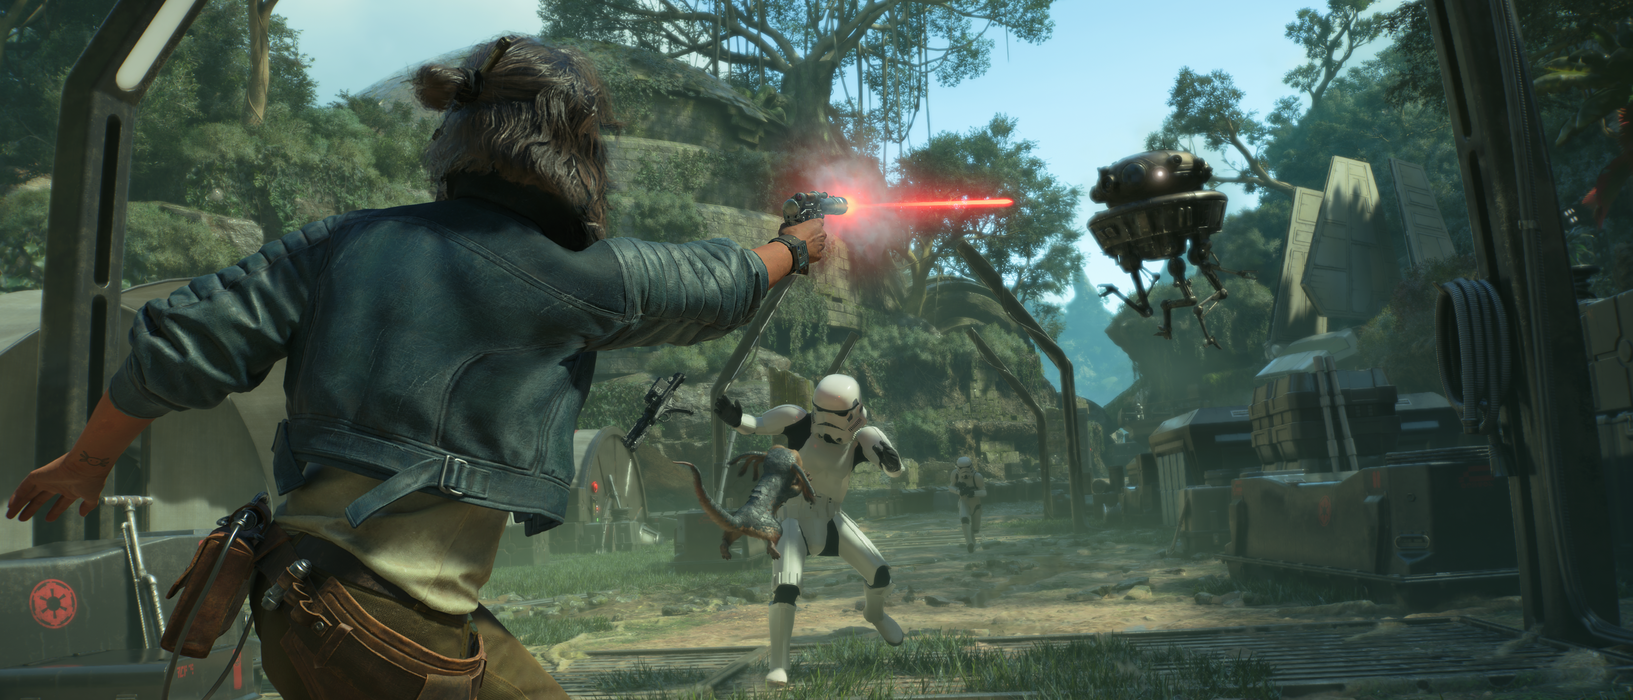 Star Wars Outlaws - Xbox Series X (PRE-ORDER)